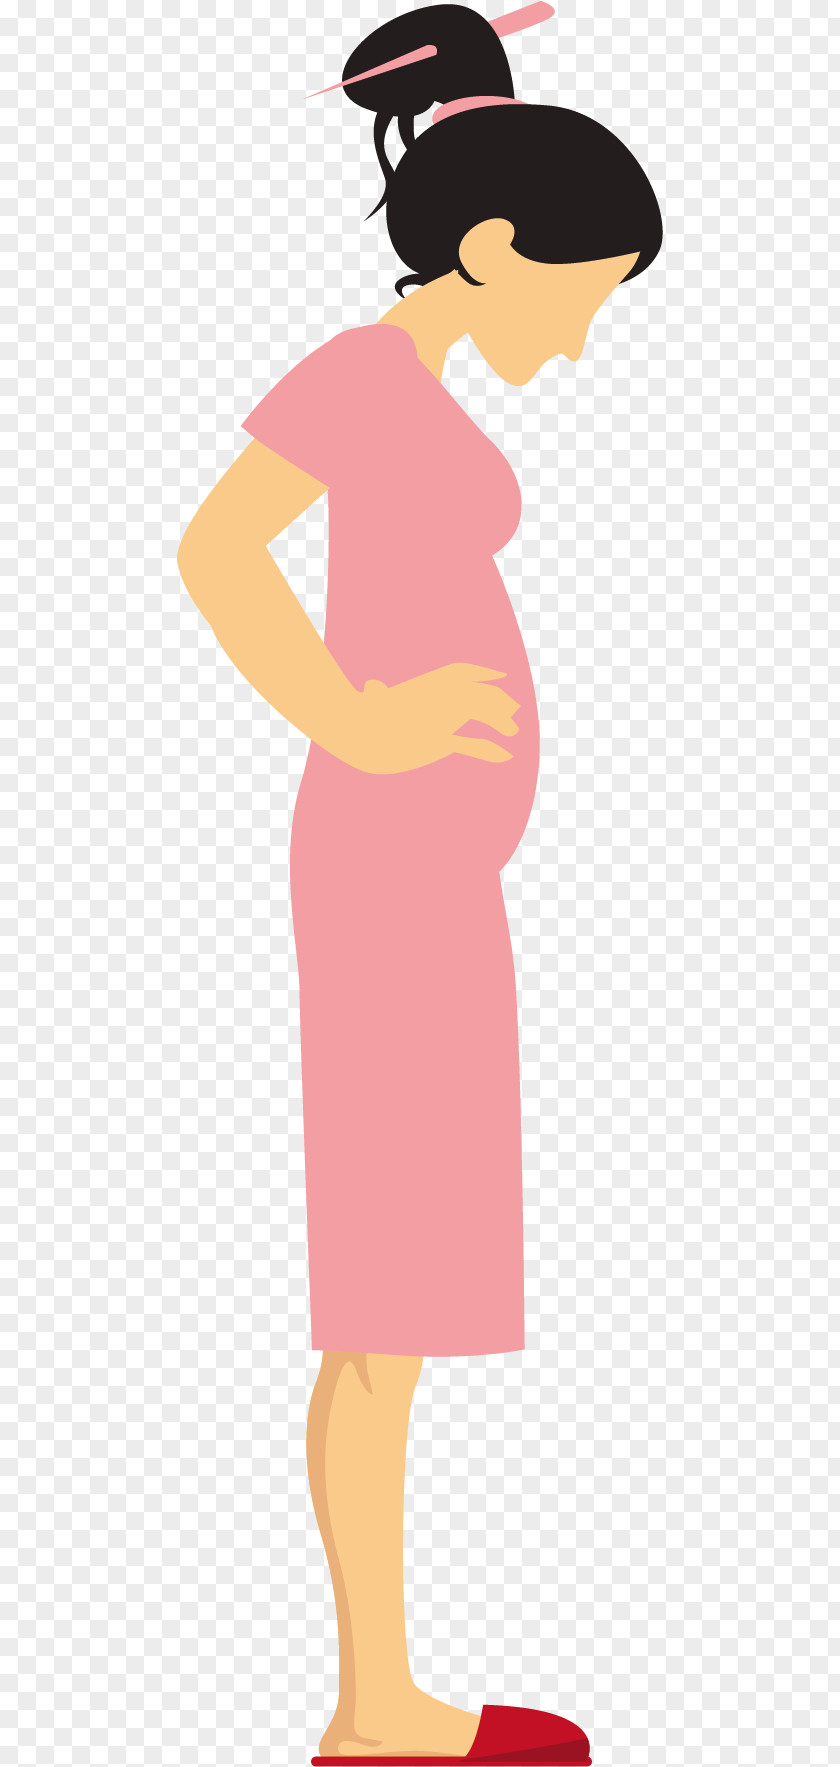 Lower Abdomen Microlong Pregnant Women Woman Illustration PNG